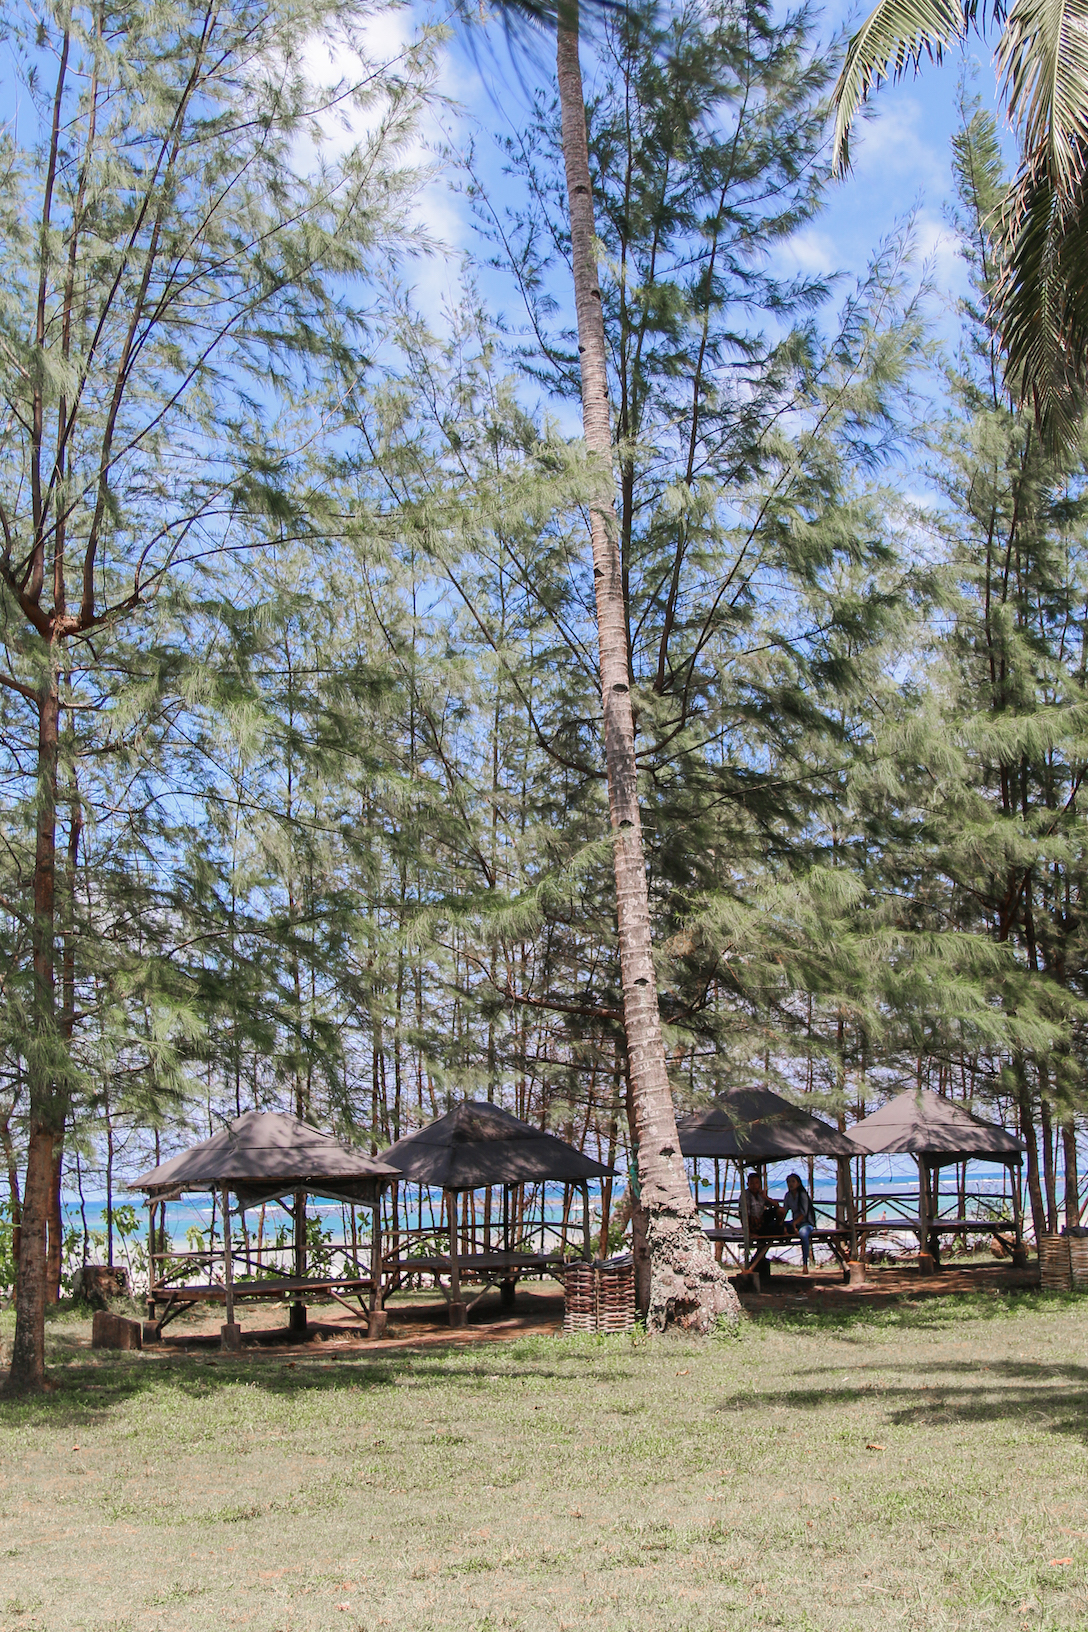 Trikora beach huts